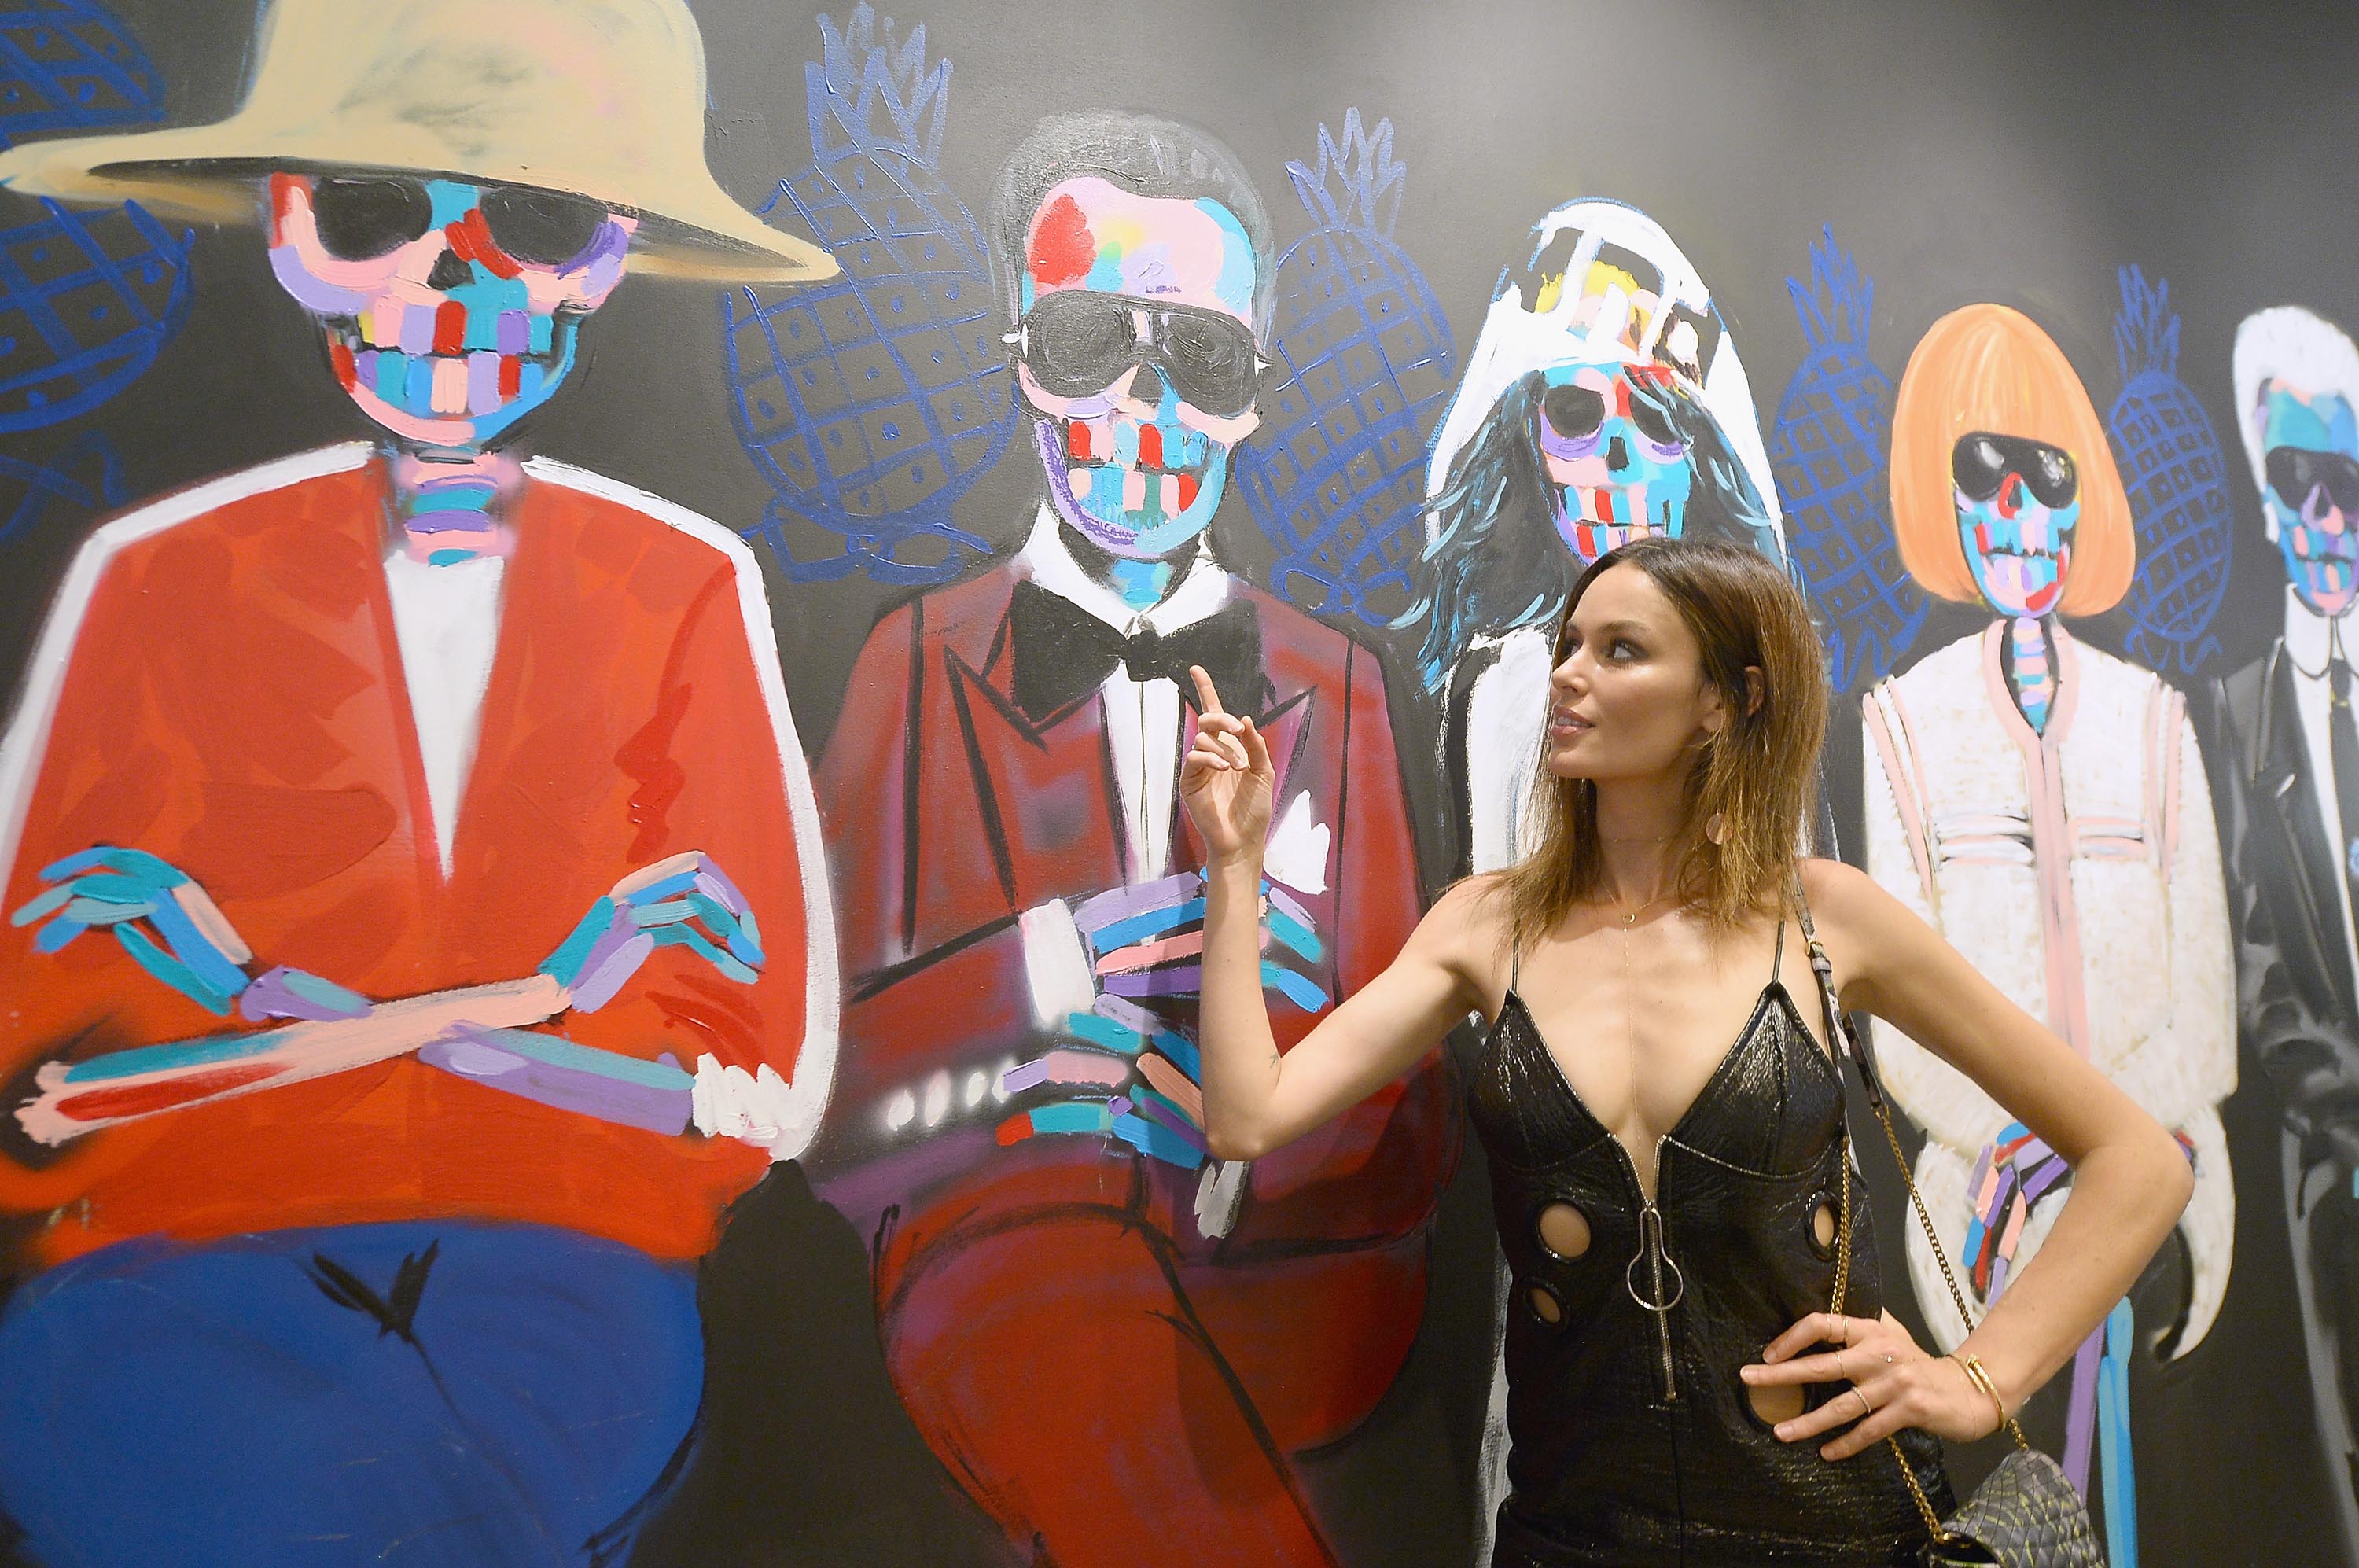 Nicole Trunfio attends E! IMG New York Fashion Week Kick-Off